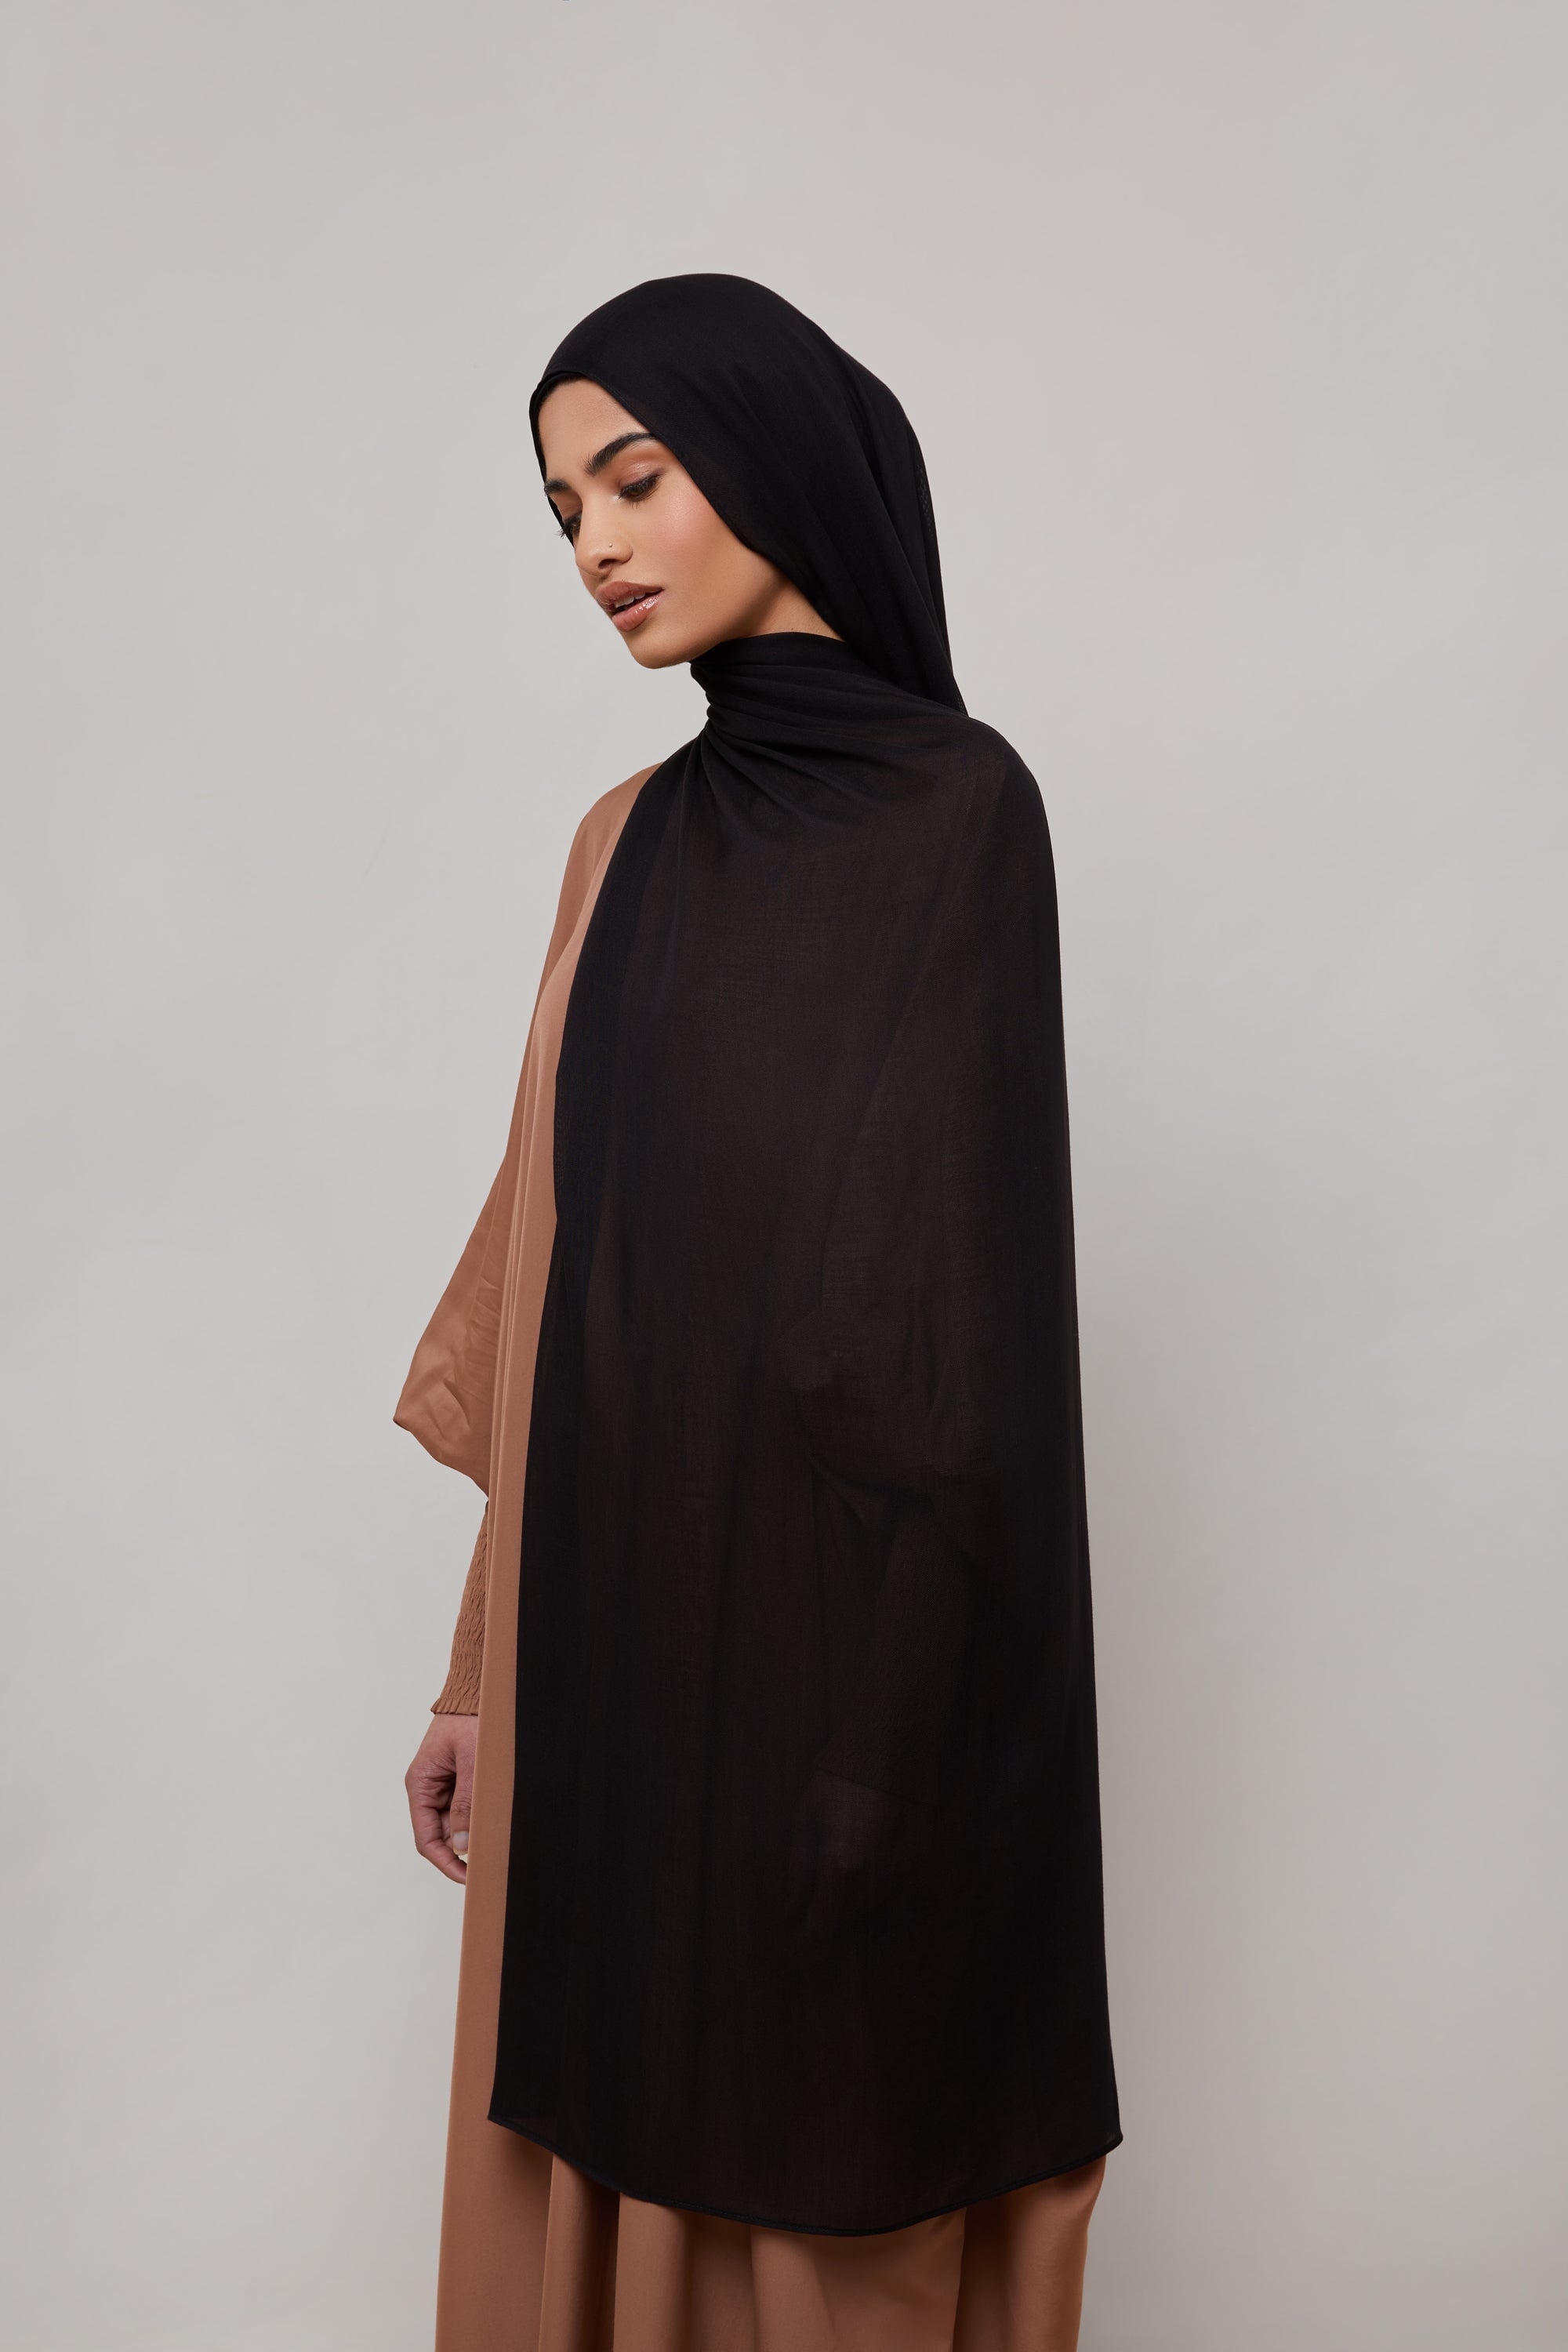 Bamboo Woven Hijab - Black Veiled 